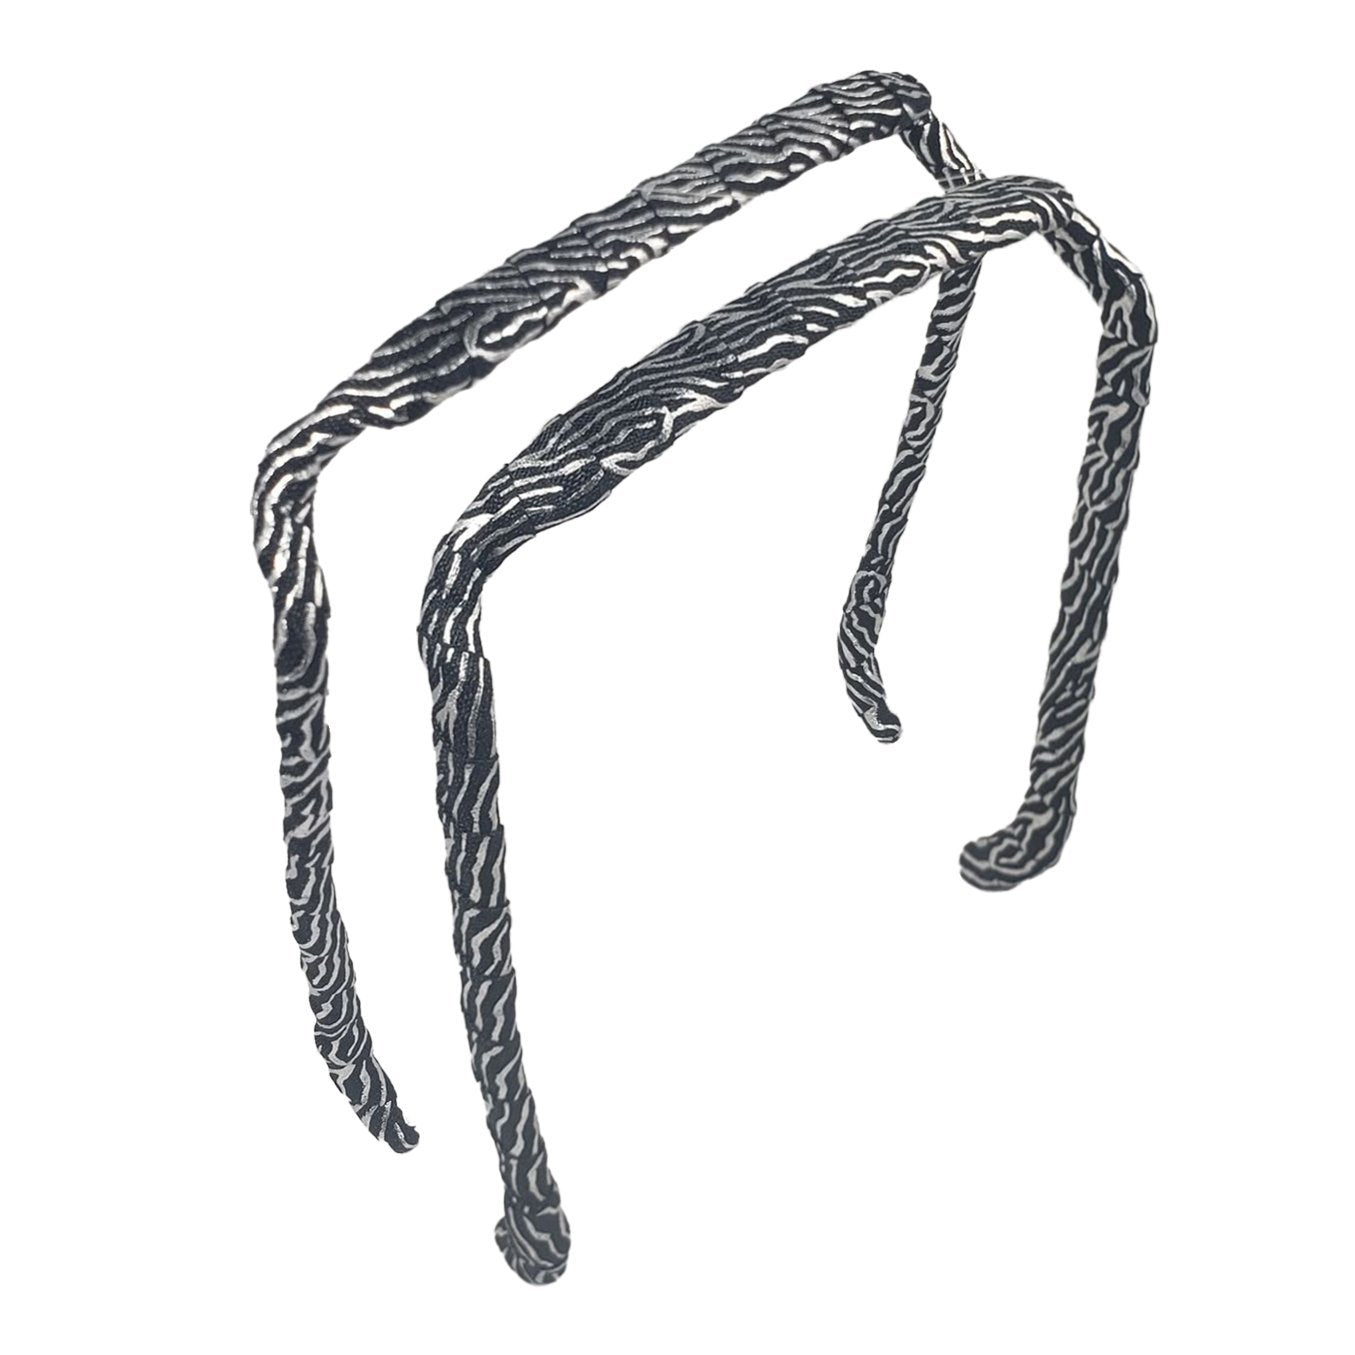 Zebra Silver and Black Headband - Zazzy Bandz - hair accessory - curly hair